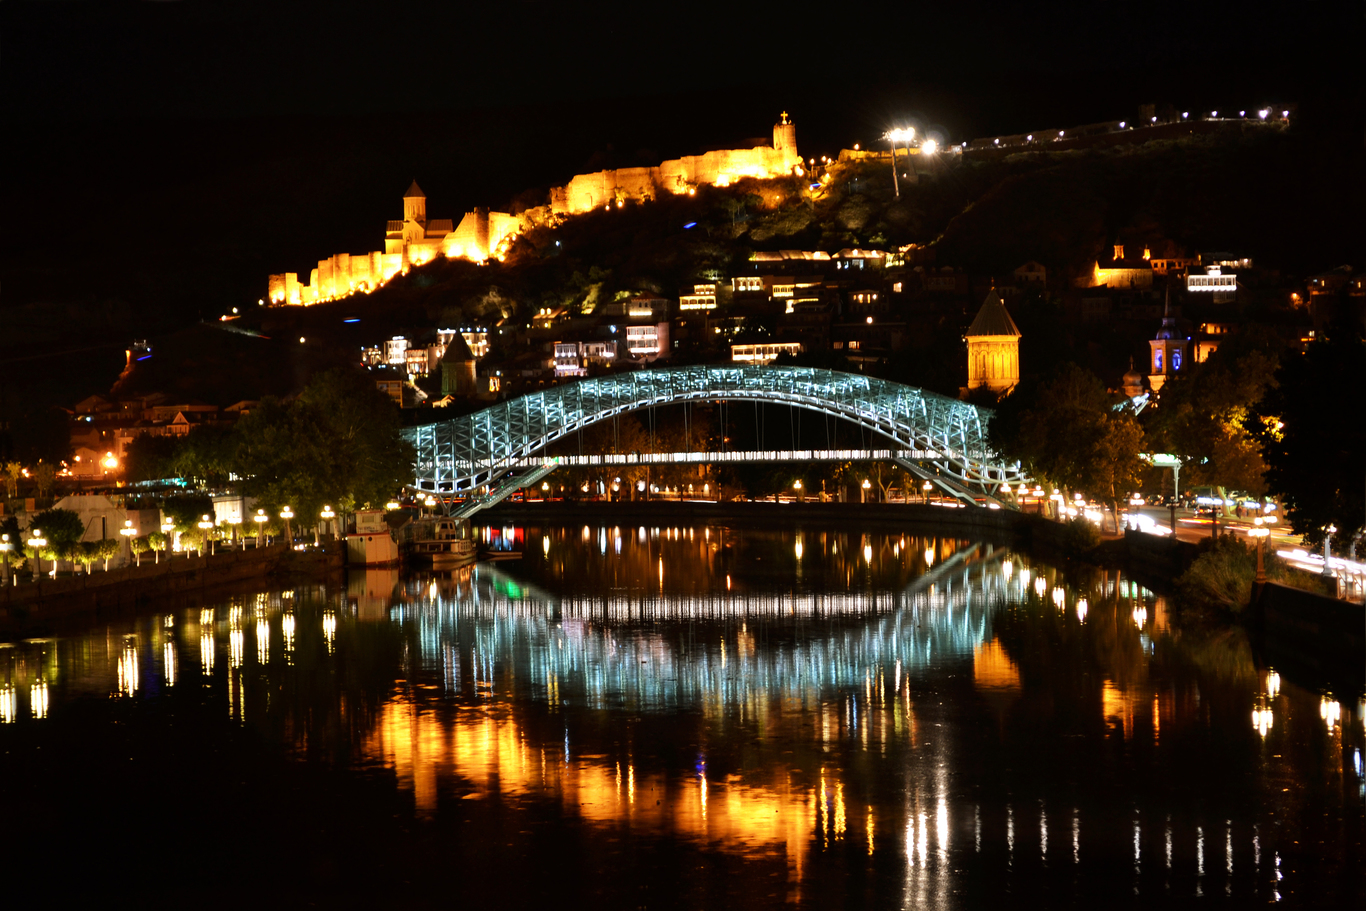 http://1.bp.blogspot.com/-5WRJMeO_vJw/Uh5GEevmiOI/AAAAAAAAwGI/0DipcO5HKD4/s1600/Tbilisi+at+night.jpg